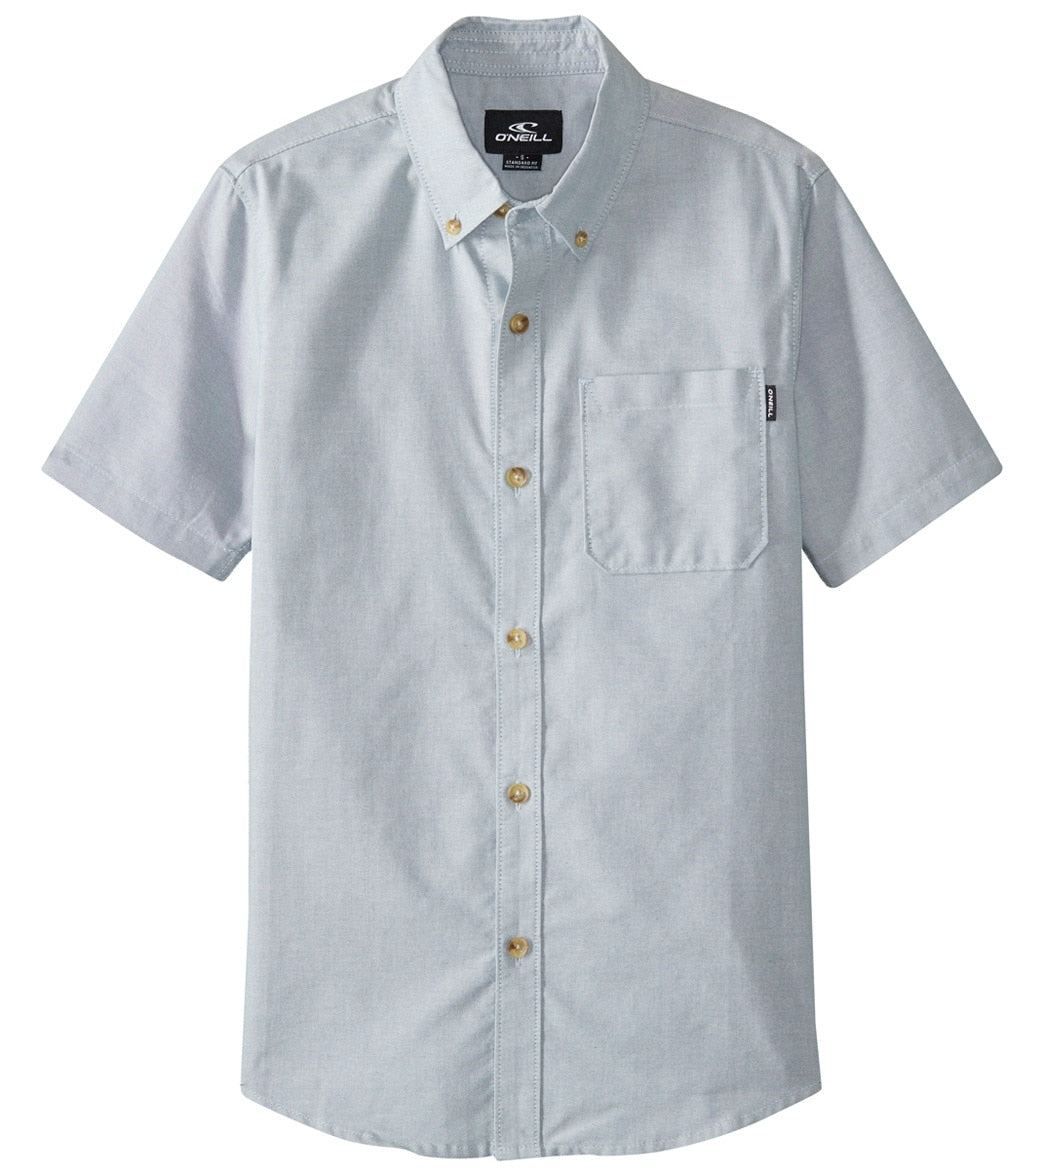 O'neill Boys' Banks Short Sleeve Shirt Big Kid - Dust Blue Small Cotton/Polyester - Swimoutlet.com